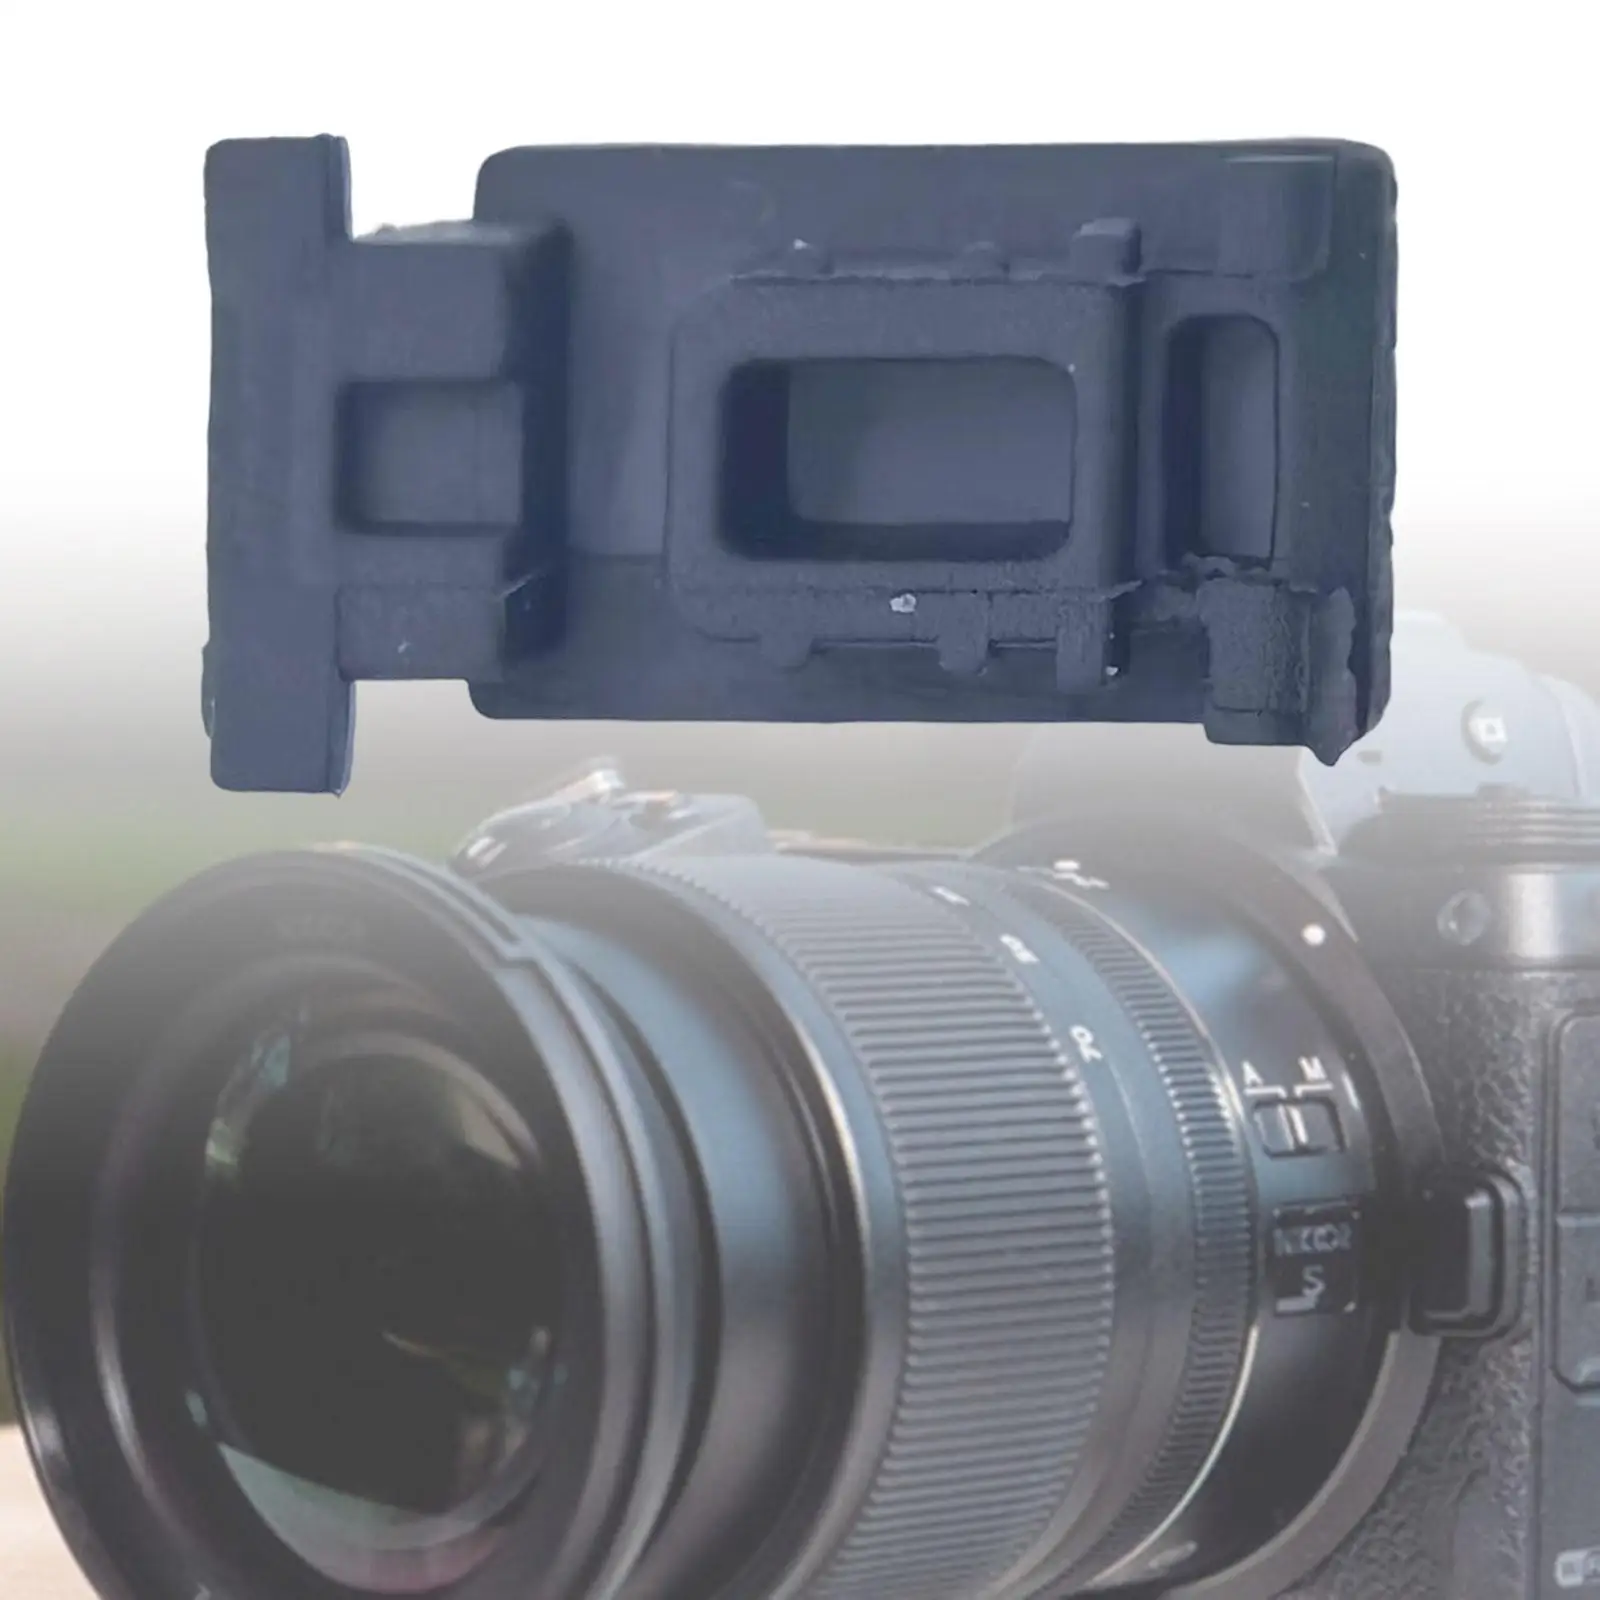 Battery Door Cover Digital Camera Repair Part Professional High performance Parts Premium Replaces Durable for Nikon Z5 Z6